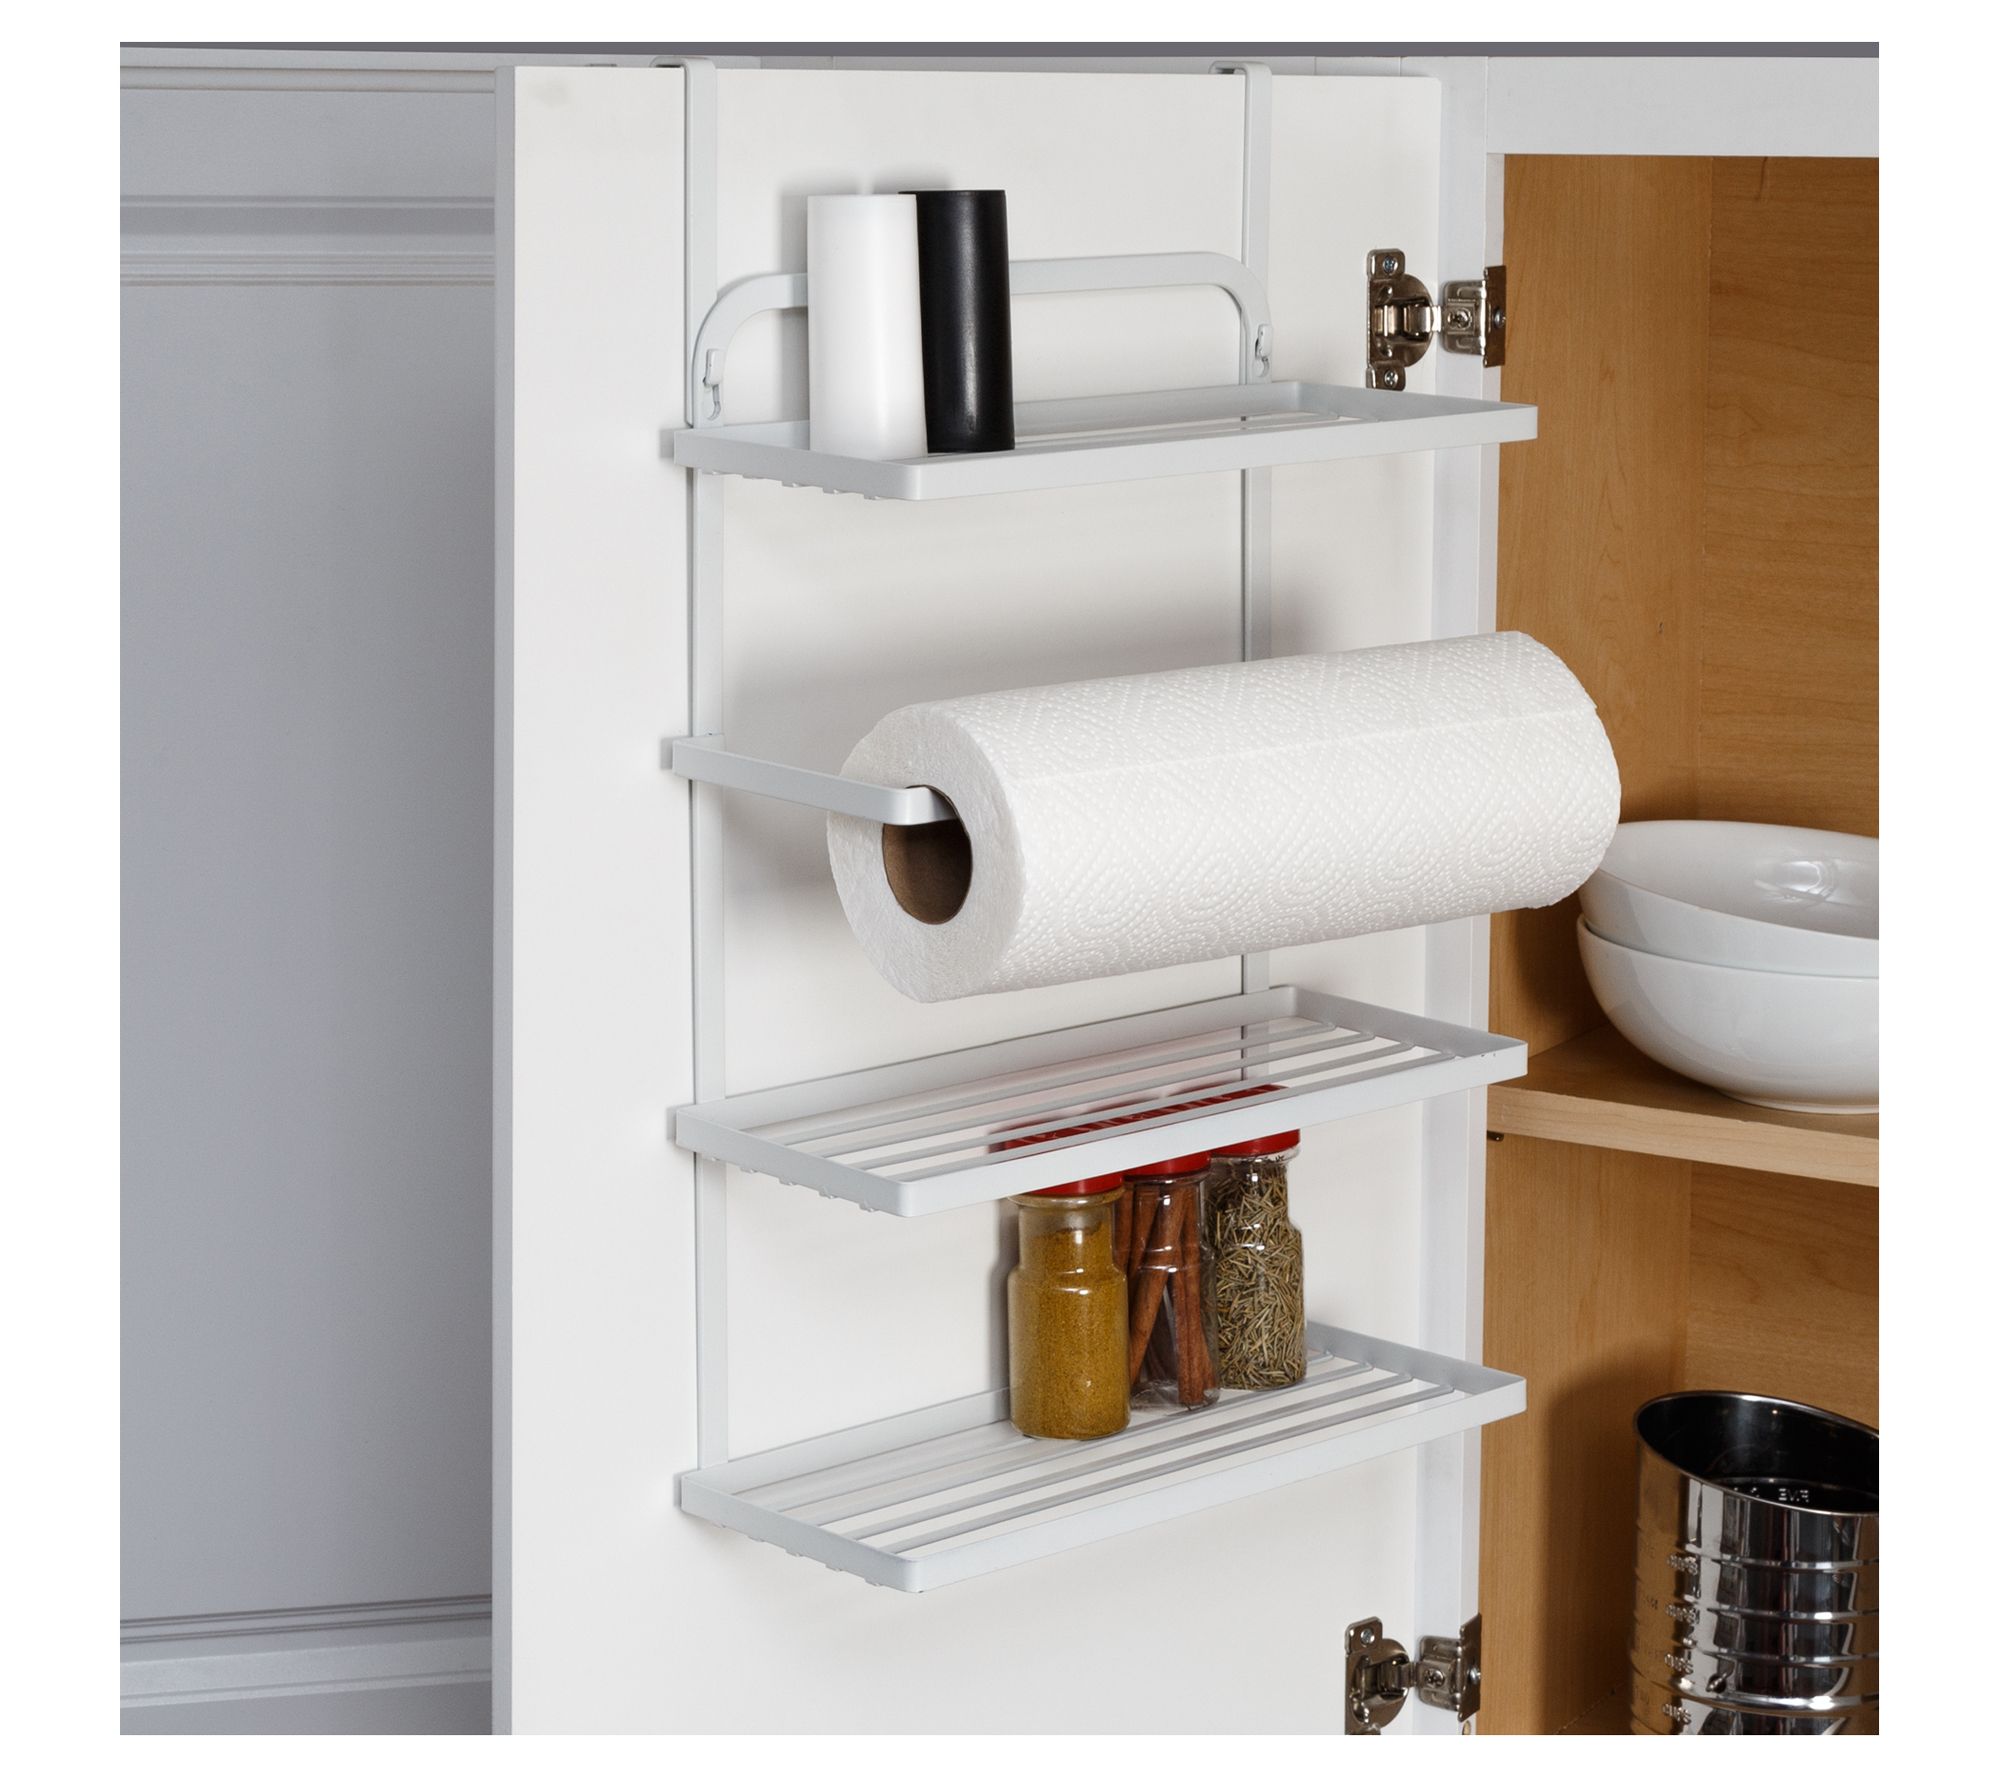 Yamazaki Home Magnetic Kitchen Towel Hanger - Steel - Black